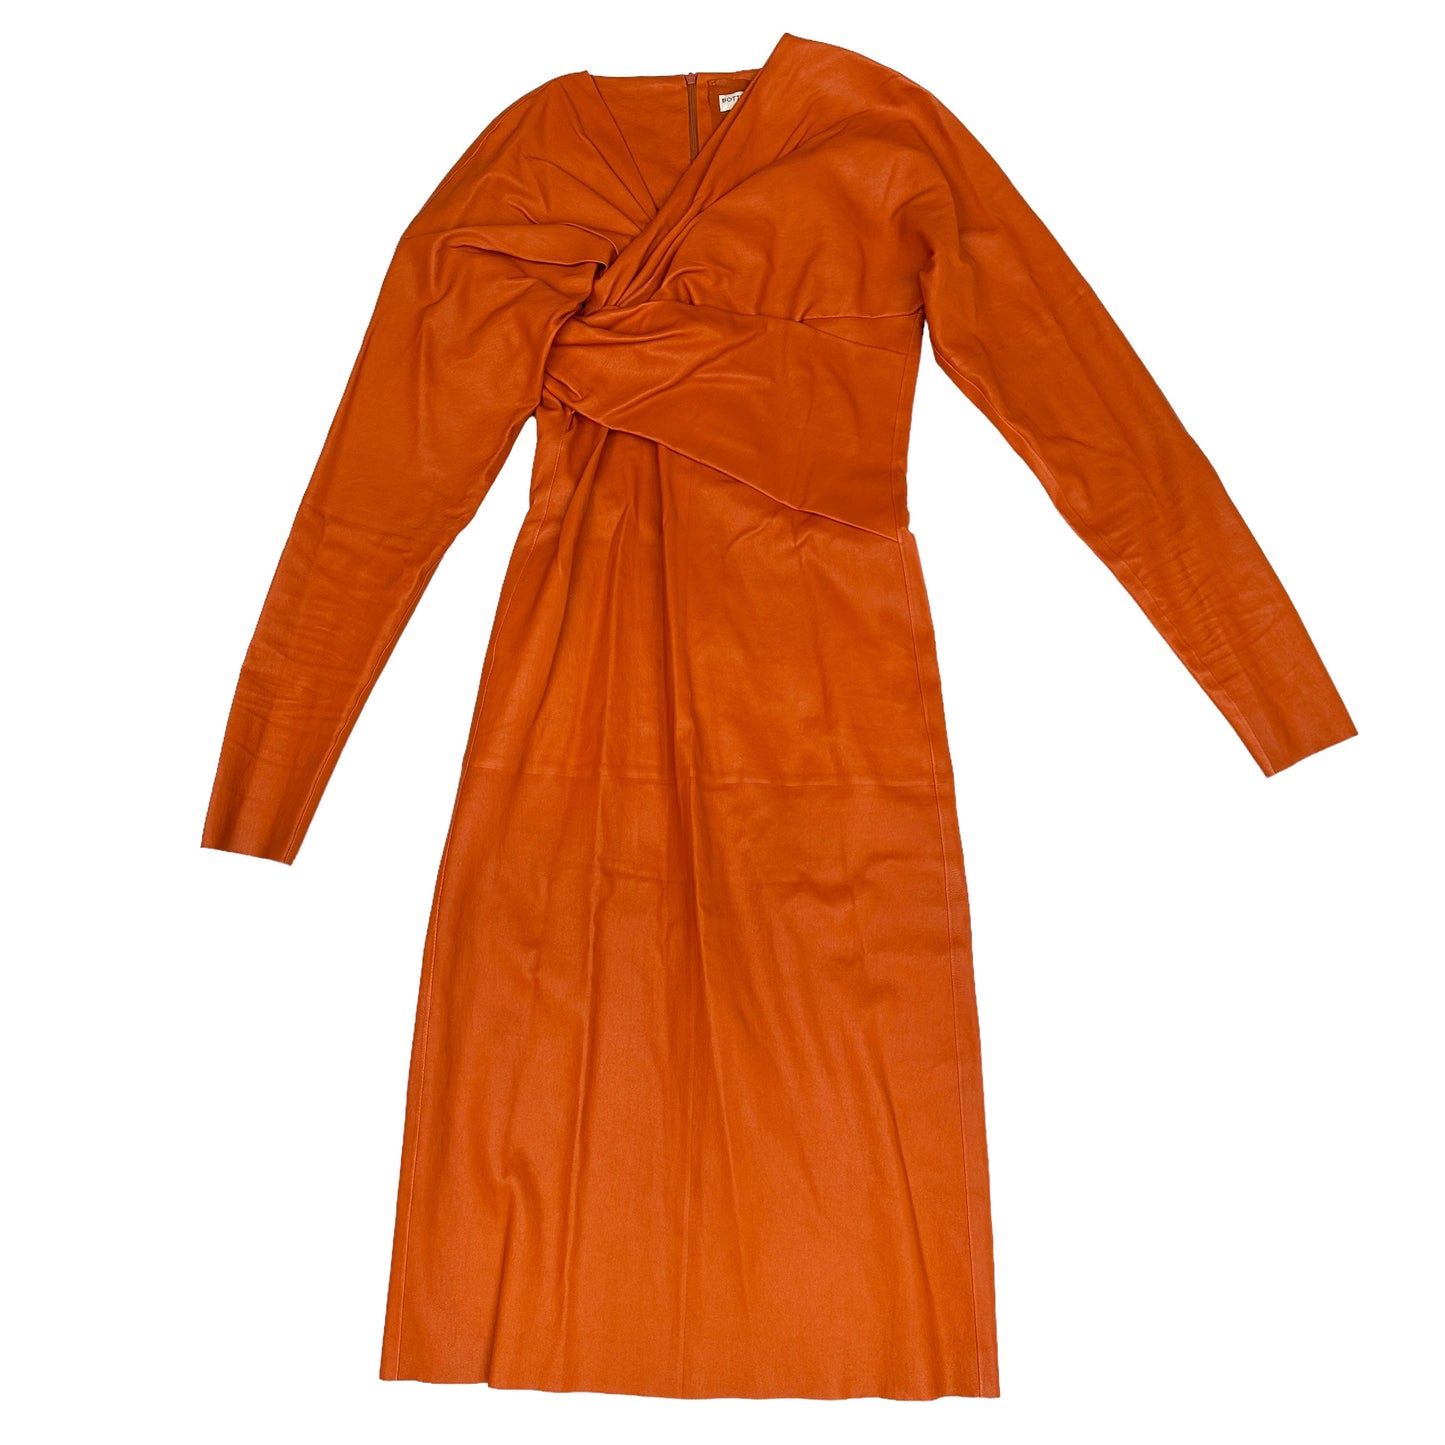 2020 Orange Leather Dress - XS